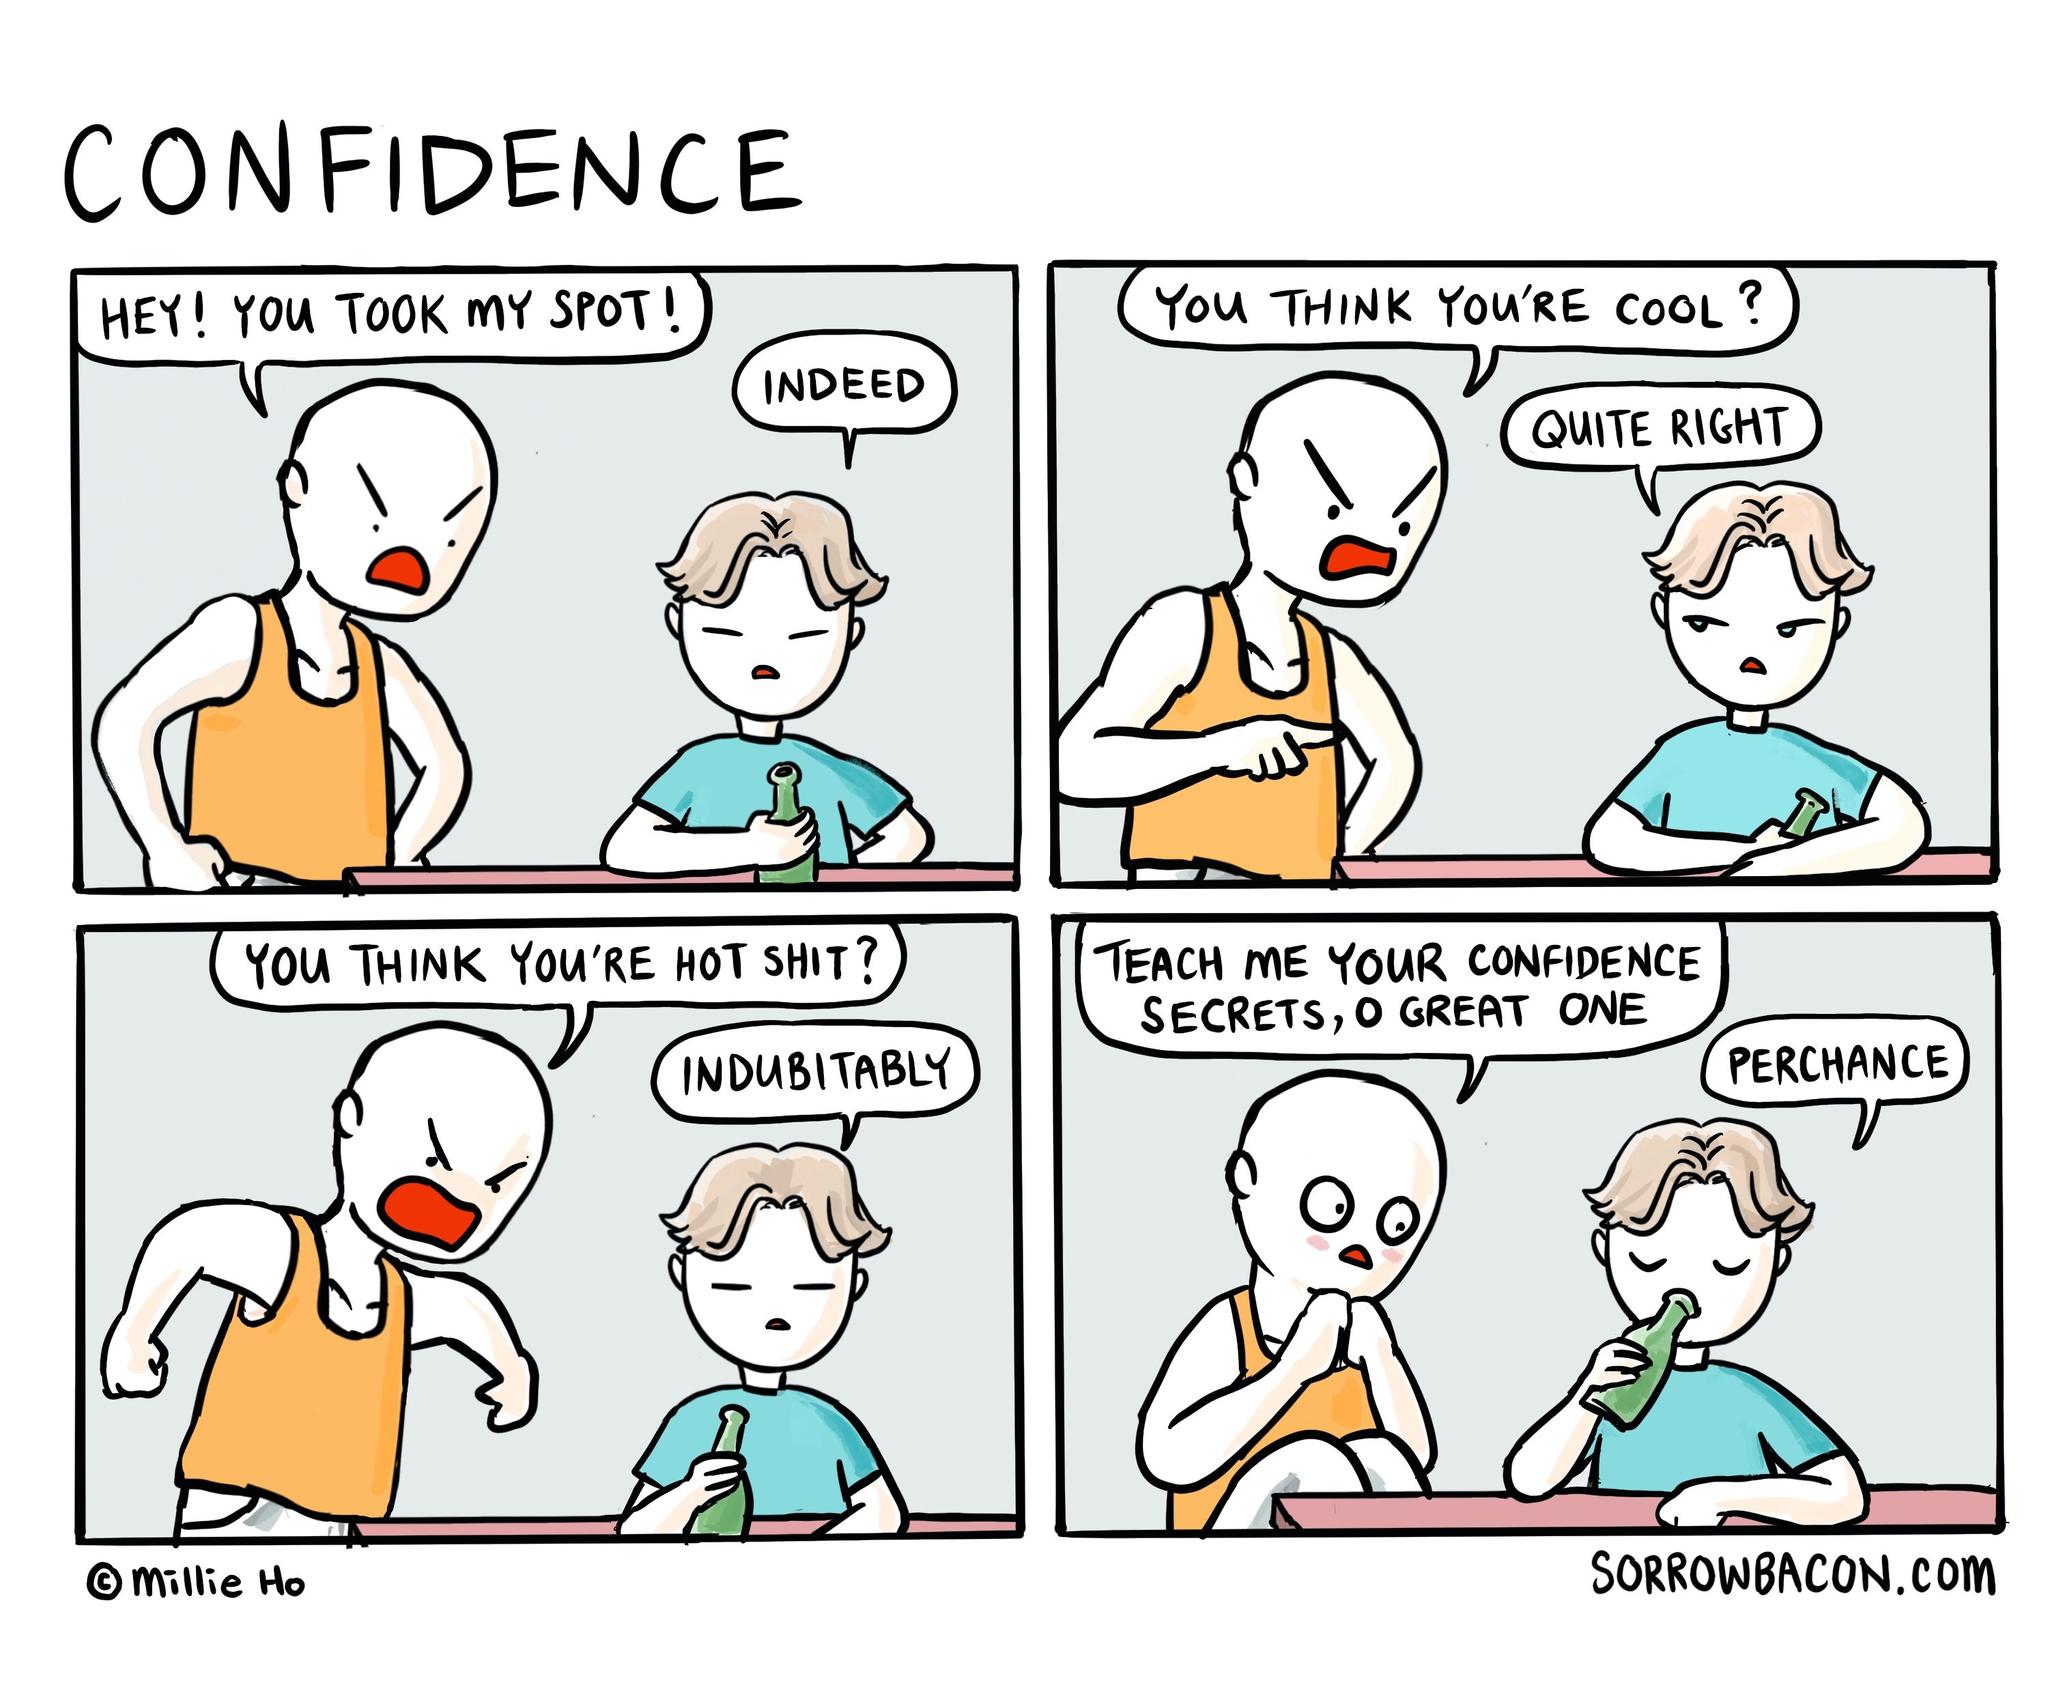 Confidence sorrowbacon comic